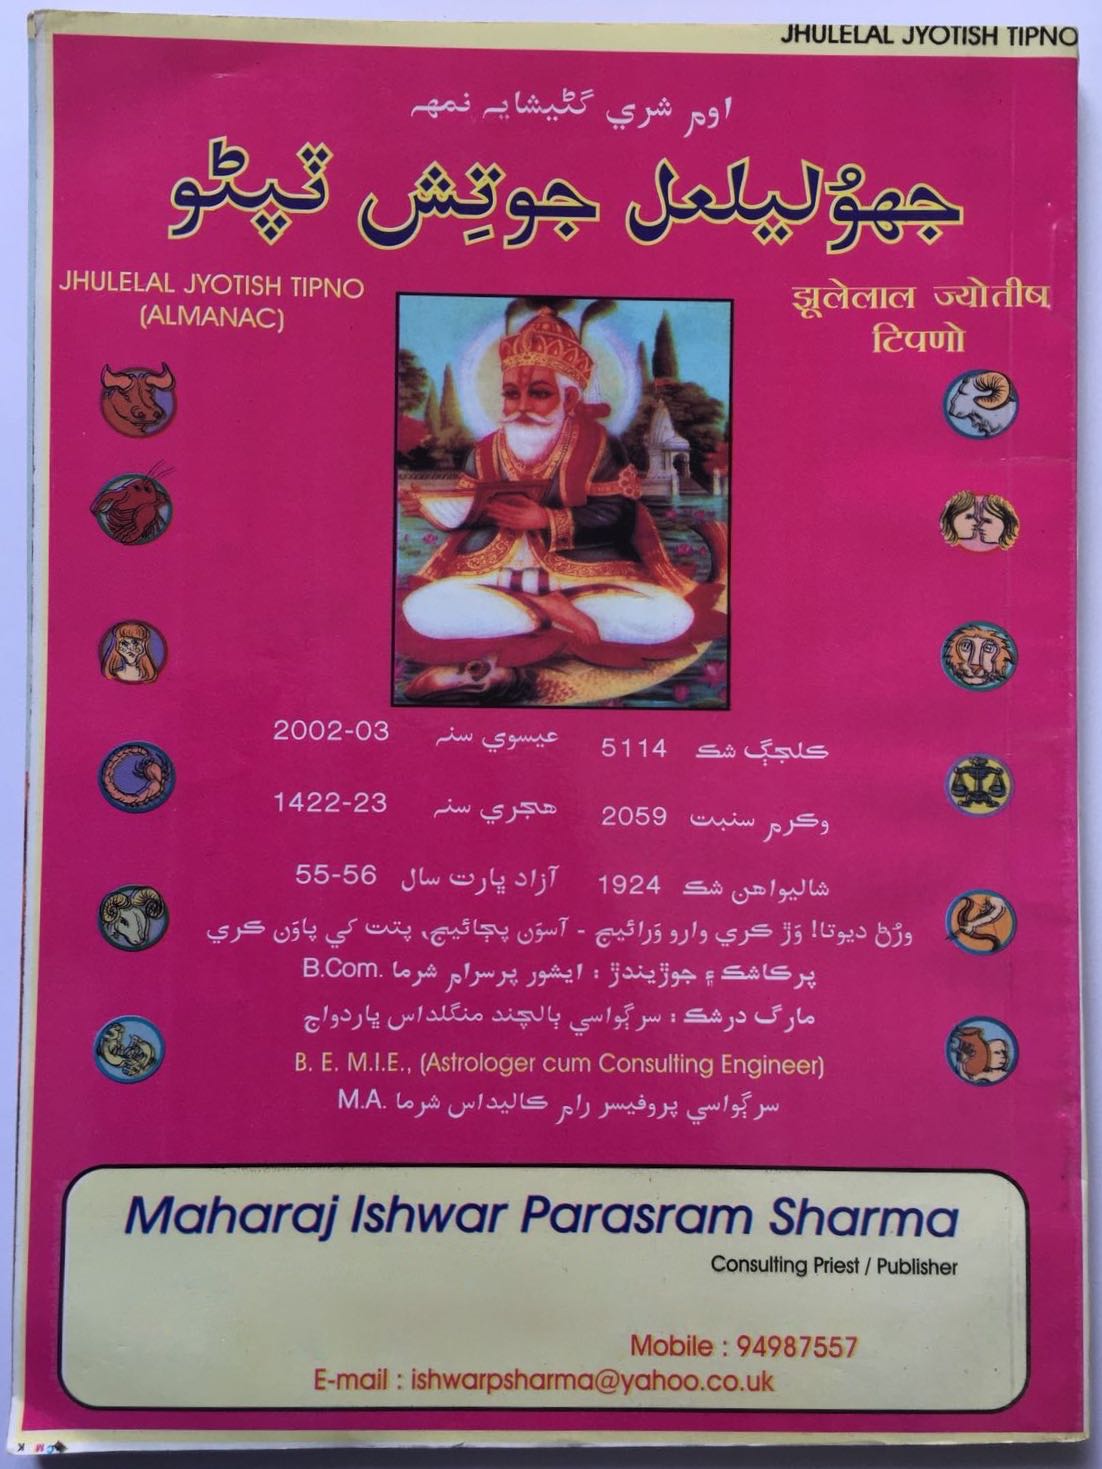 Jhulelal Jyotish Tipno (Almanac) Year 2002-03 compiled by Ishwar Parsram Sharma in Hindi, Sindhi, Sanskrit and English - Top cover page Sindhi side